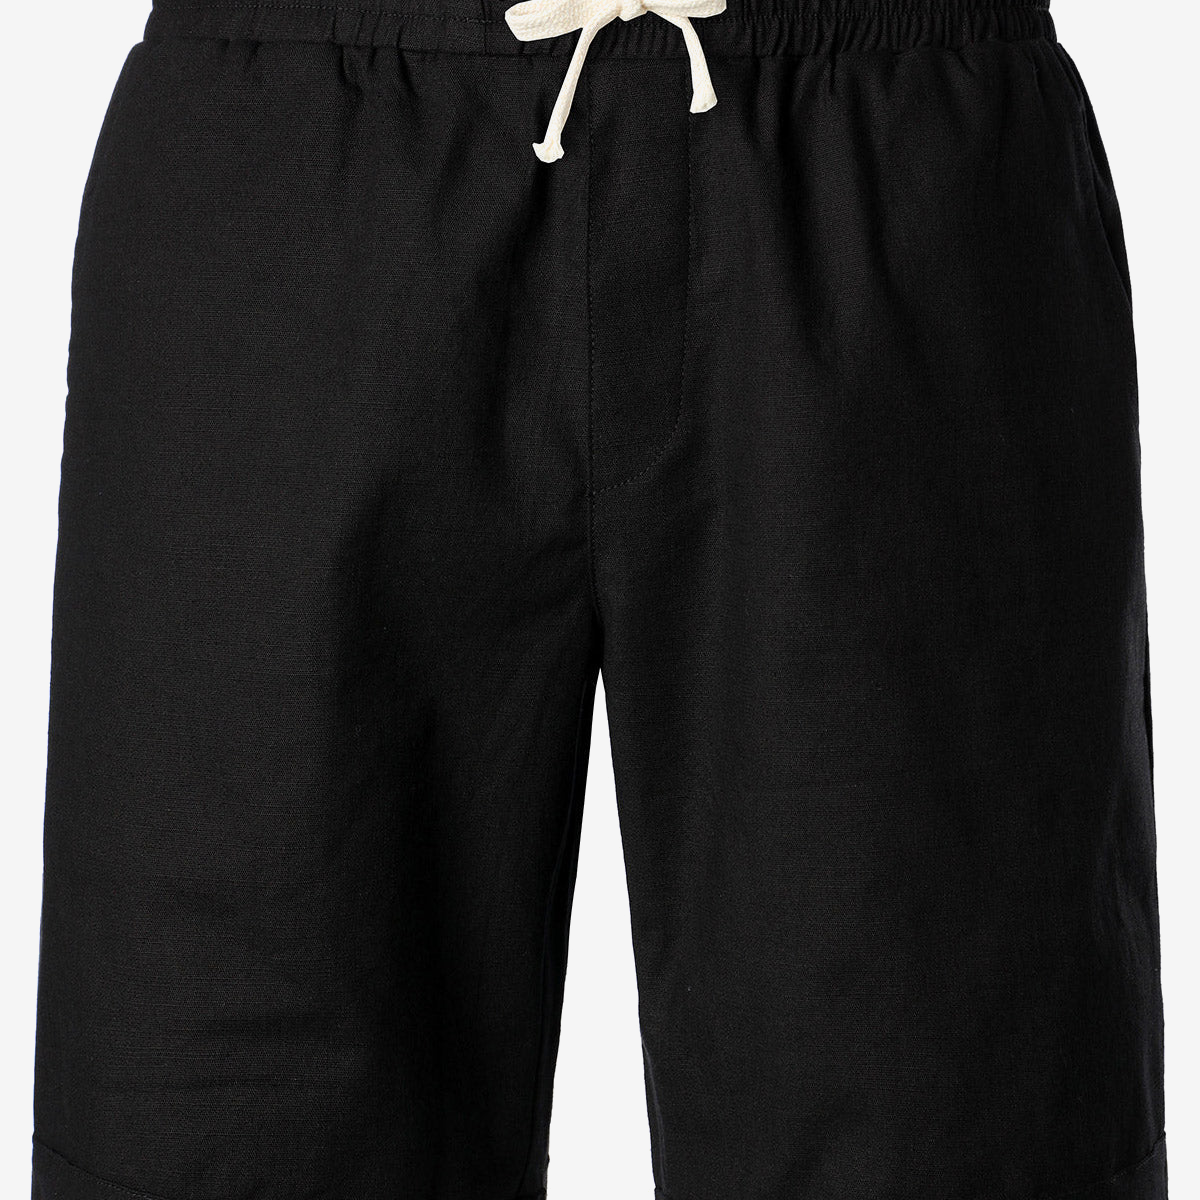 Men's Solid Color Breathable Linen Cotton Casual Shorts